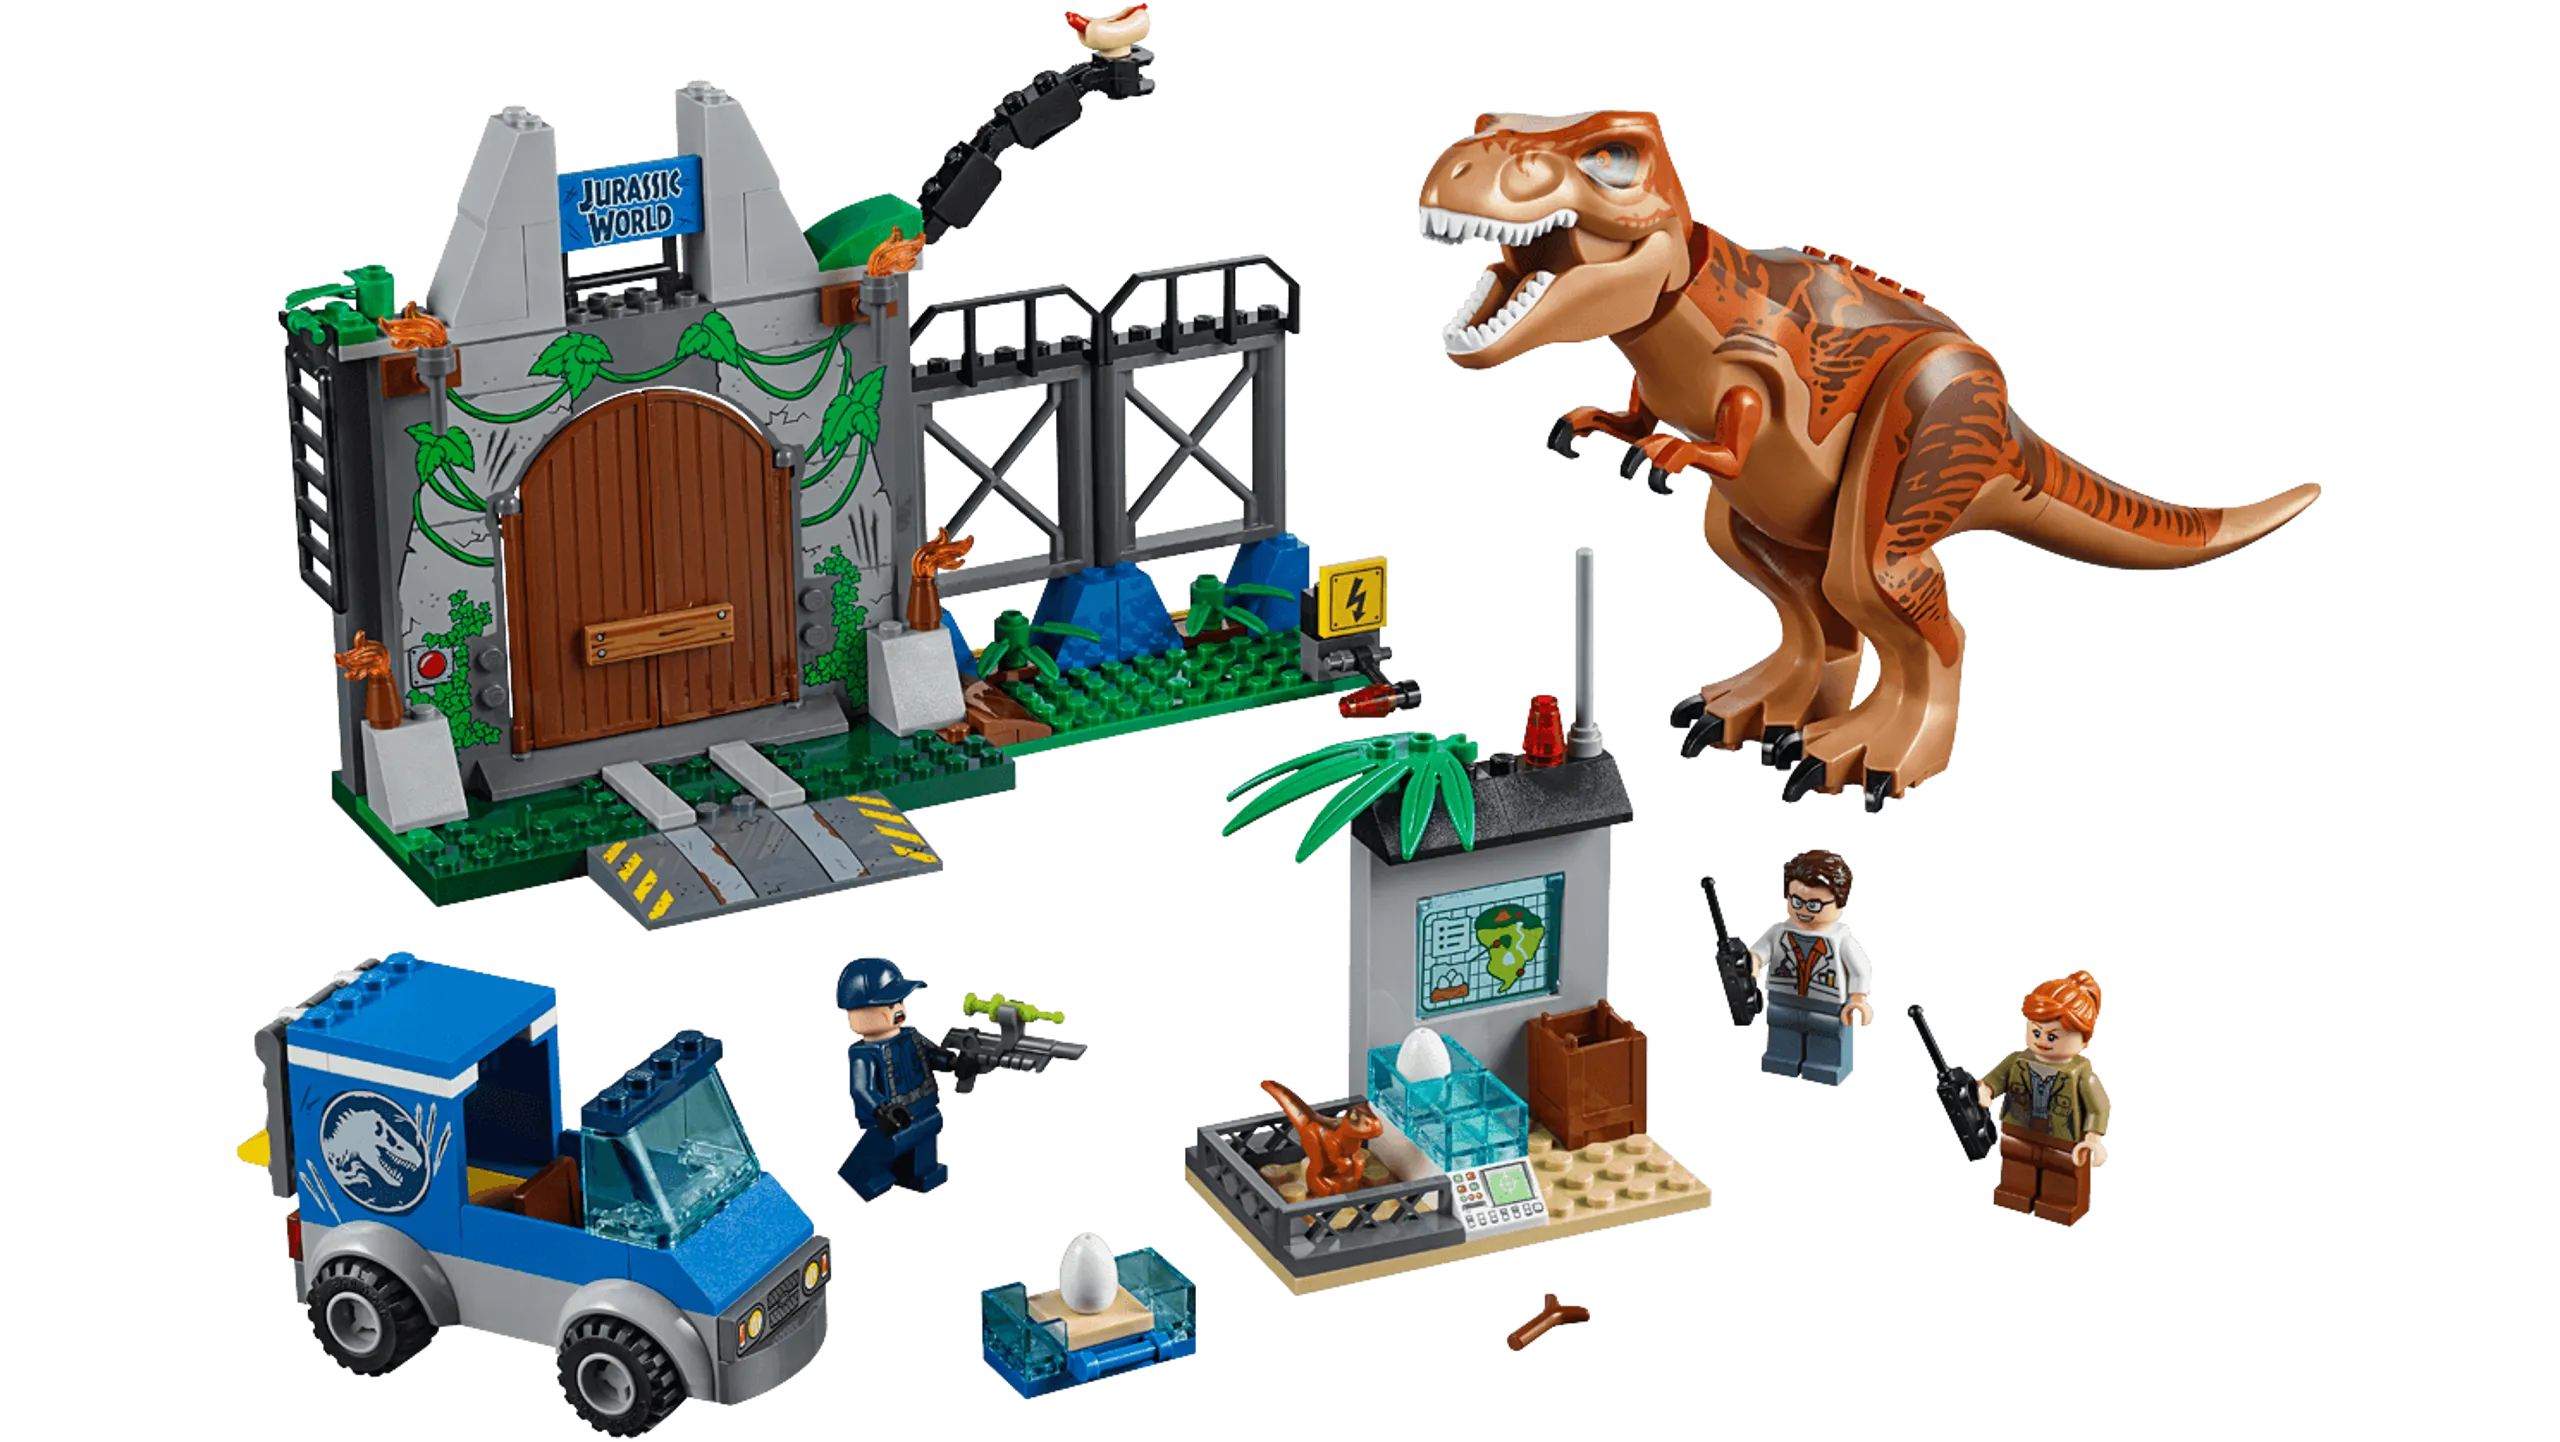 LEGO Juniors - 10758 T. rex Breakout - The set consists of three minifigures, a van, the dinosaur nursery, a dinosaur figure, a big dinosaur enclosure.